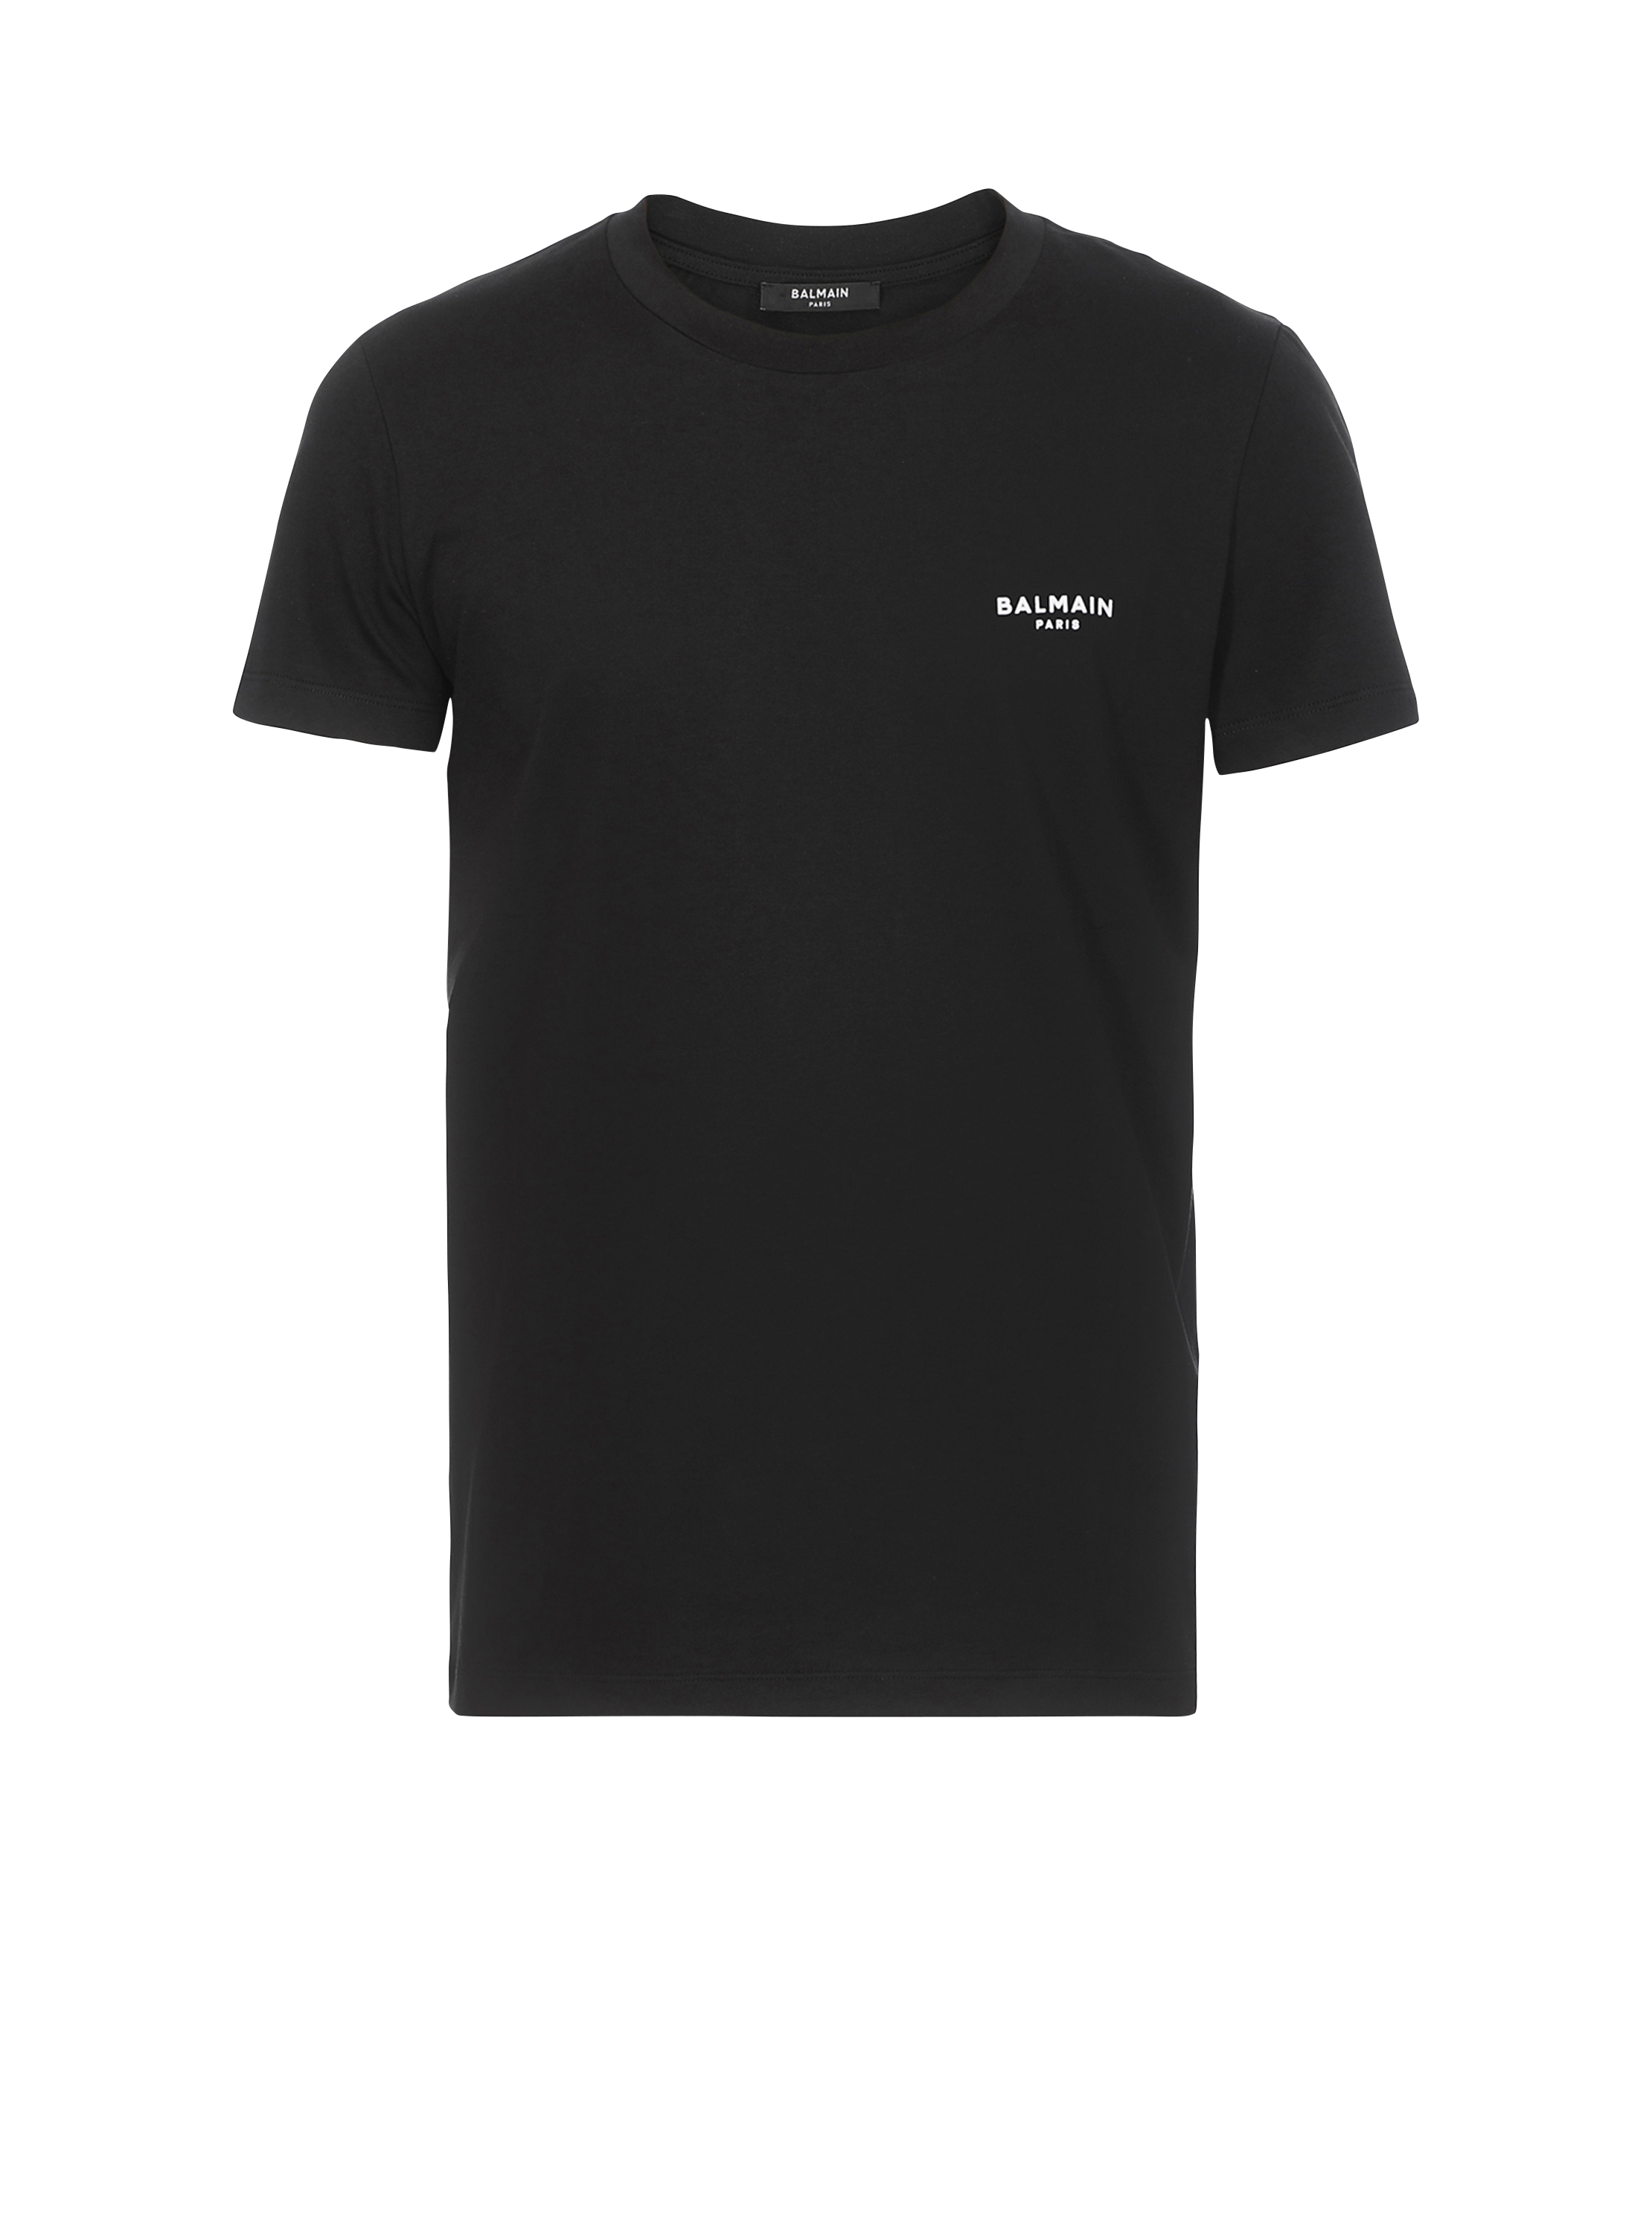 Balmain Authentic Black Men’s Balmain T-Shirt Brand New With Tags 